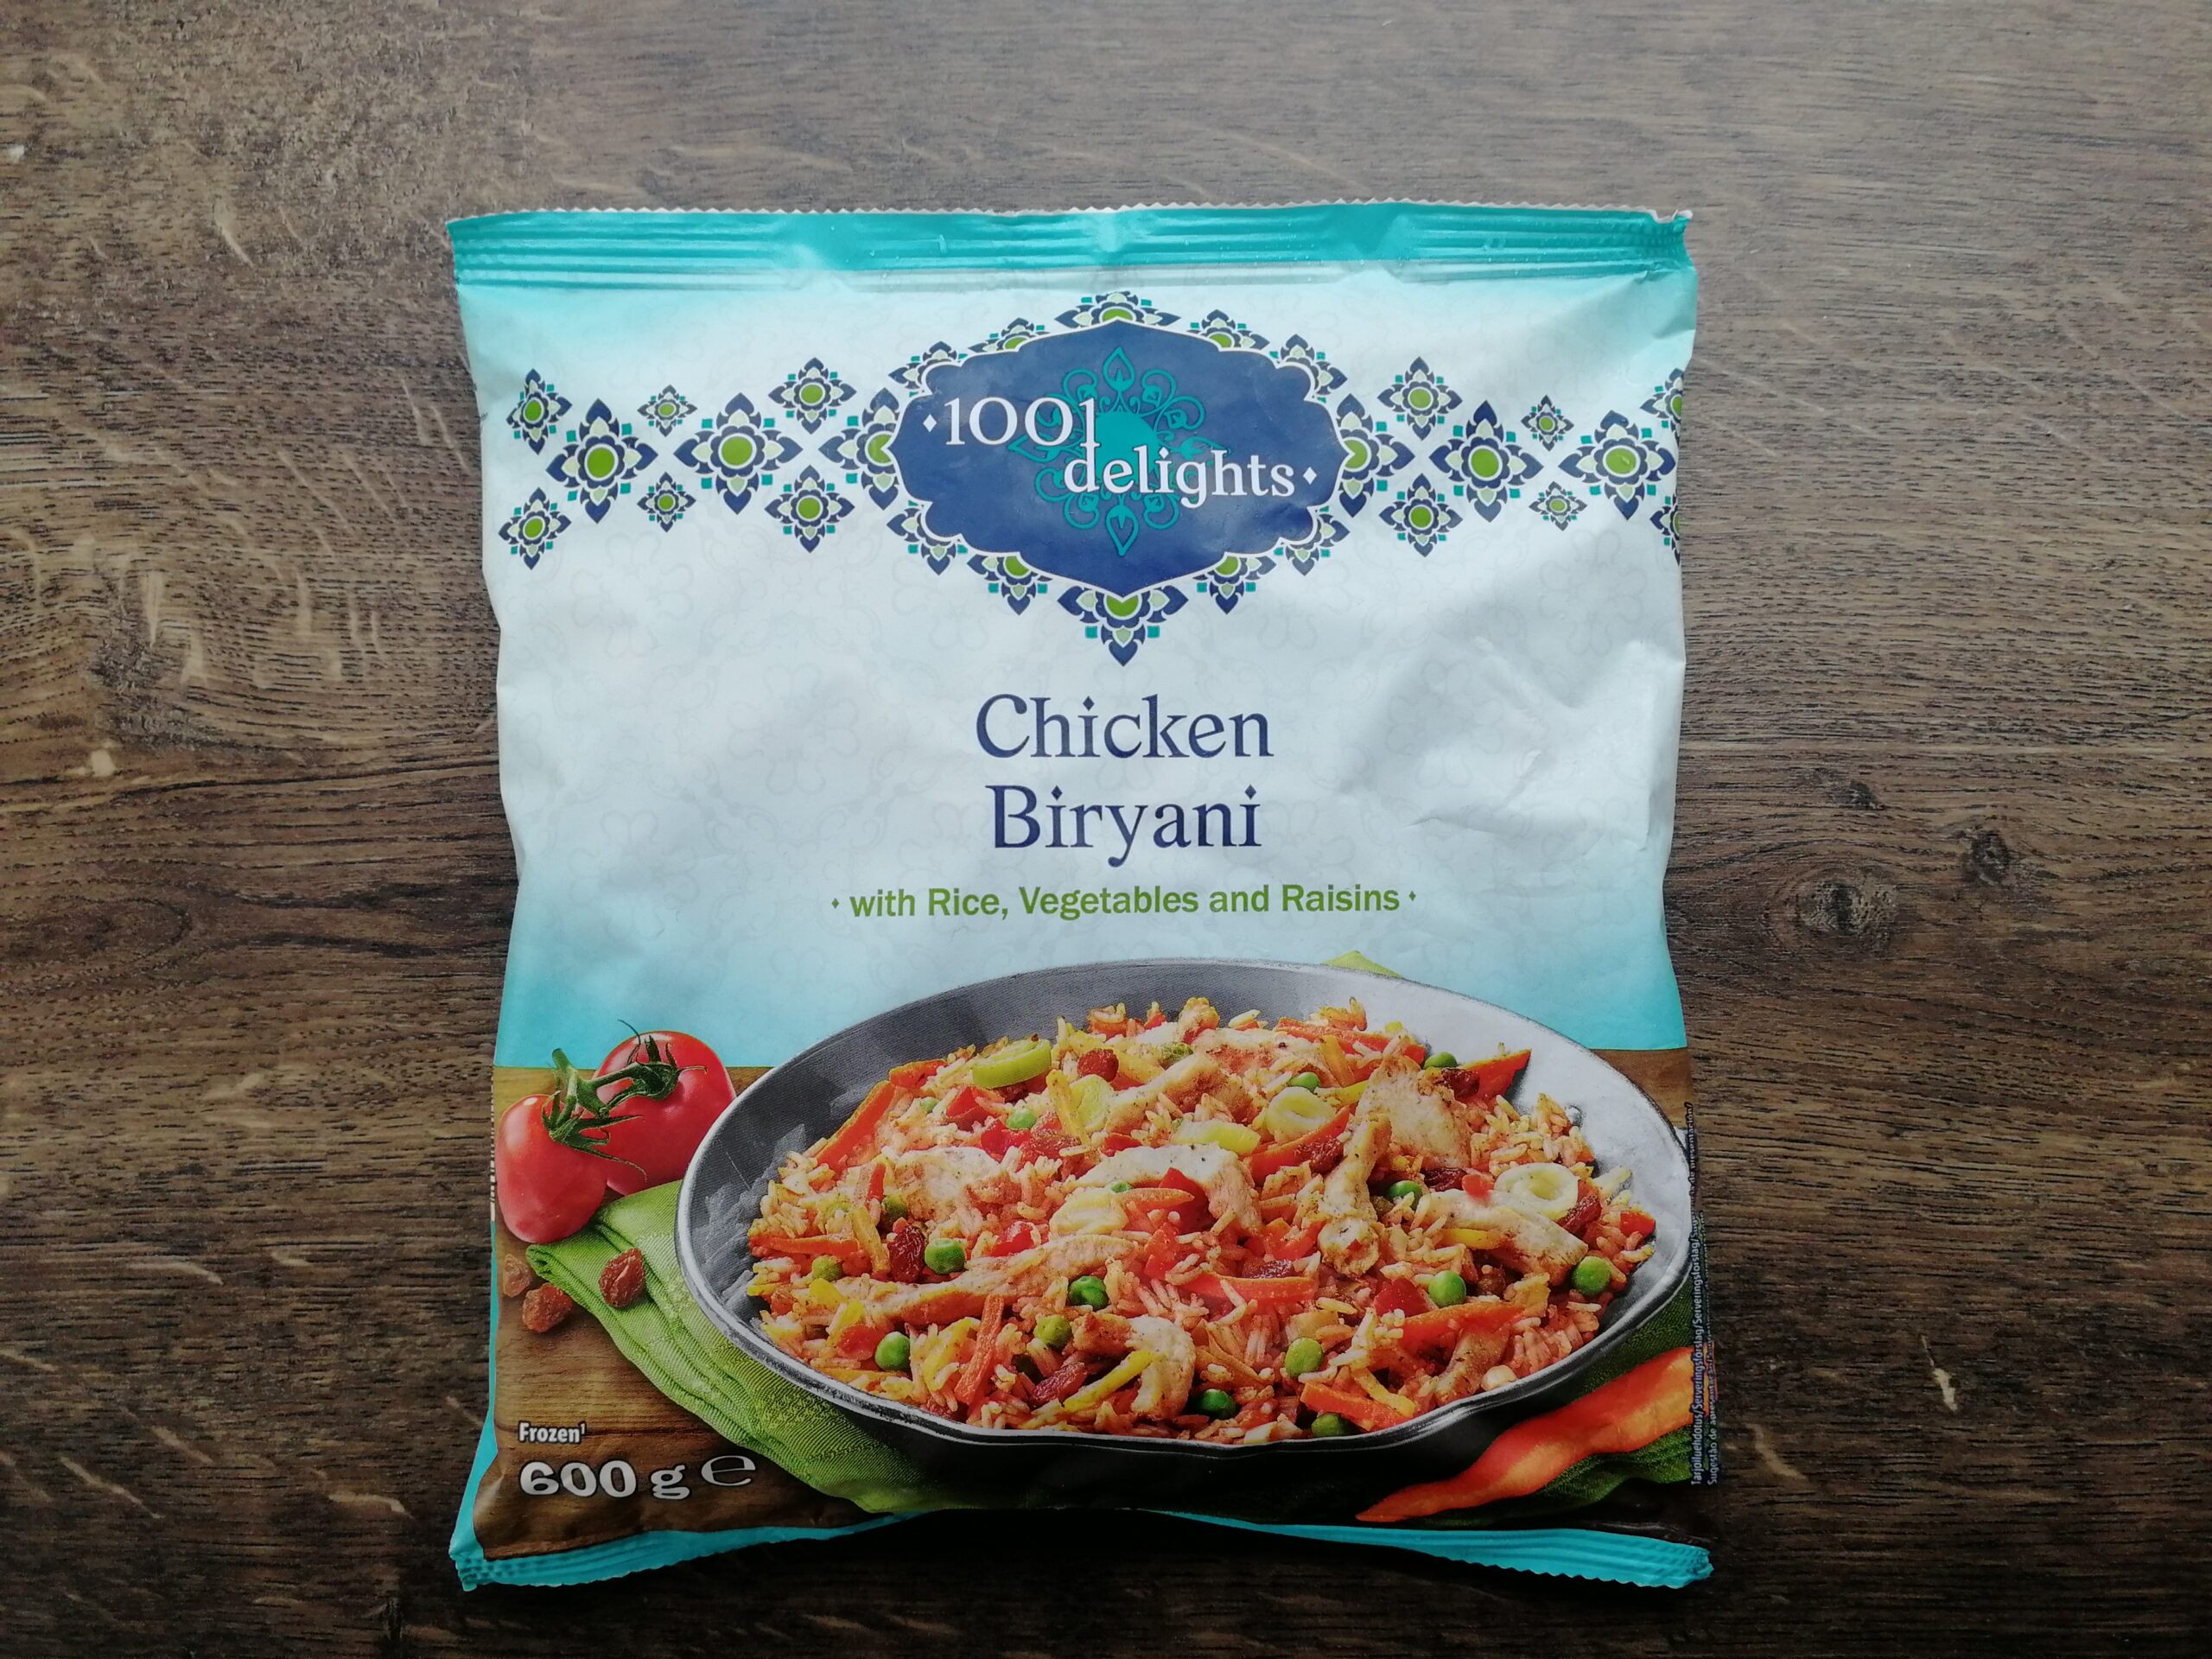 Chicken Biryani – Færdigret fra Lidl’s 1001 delights